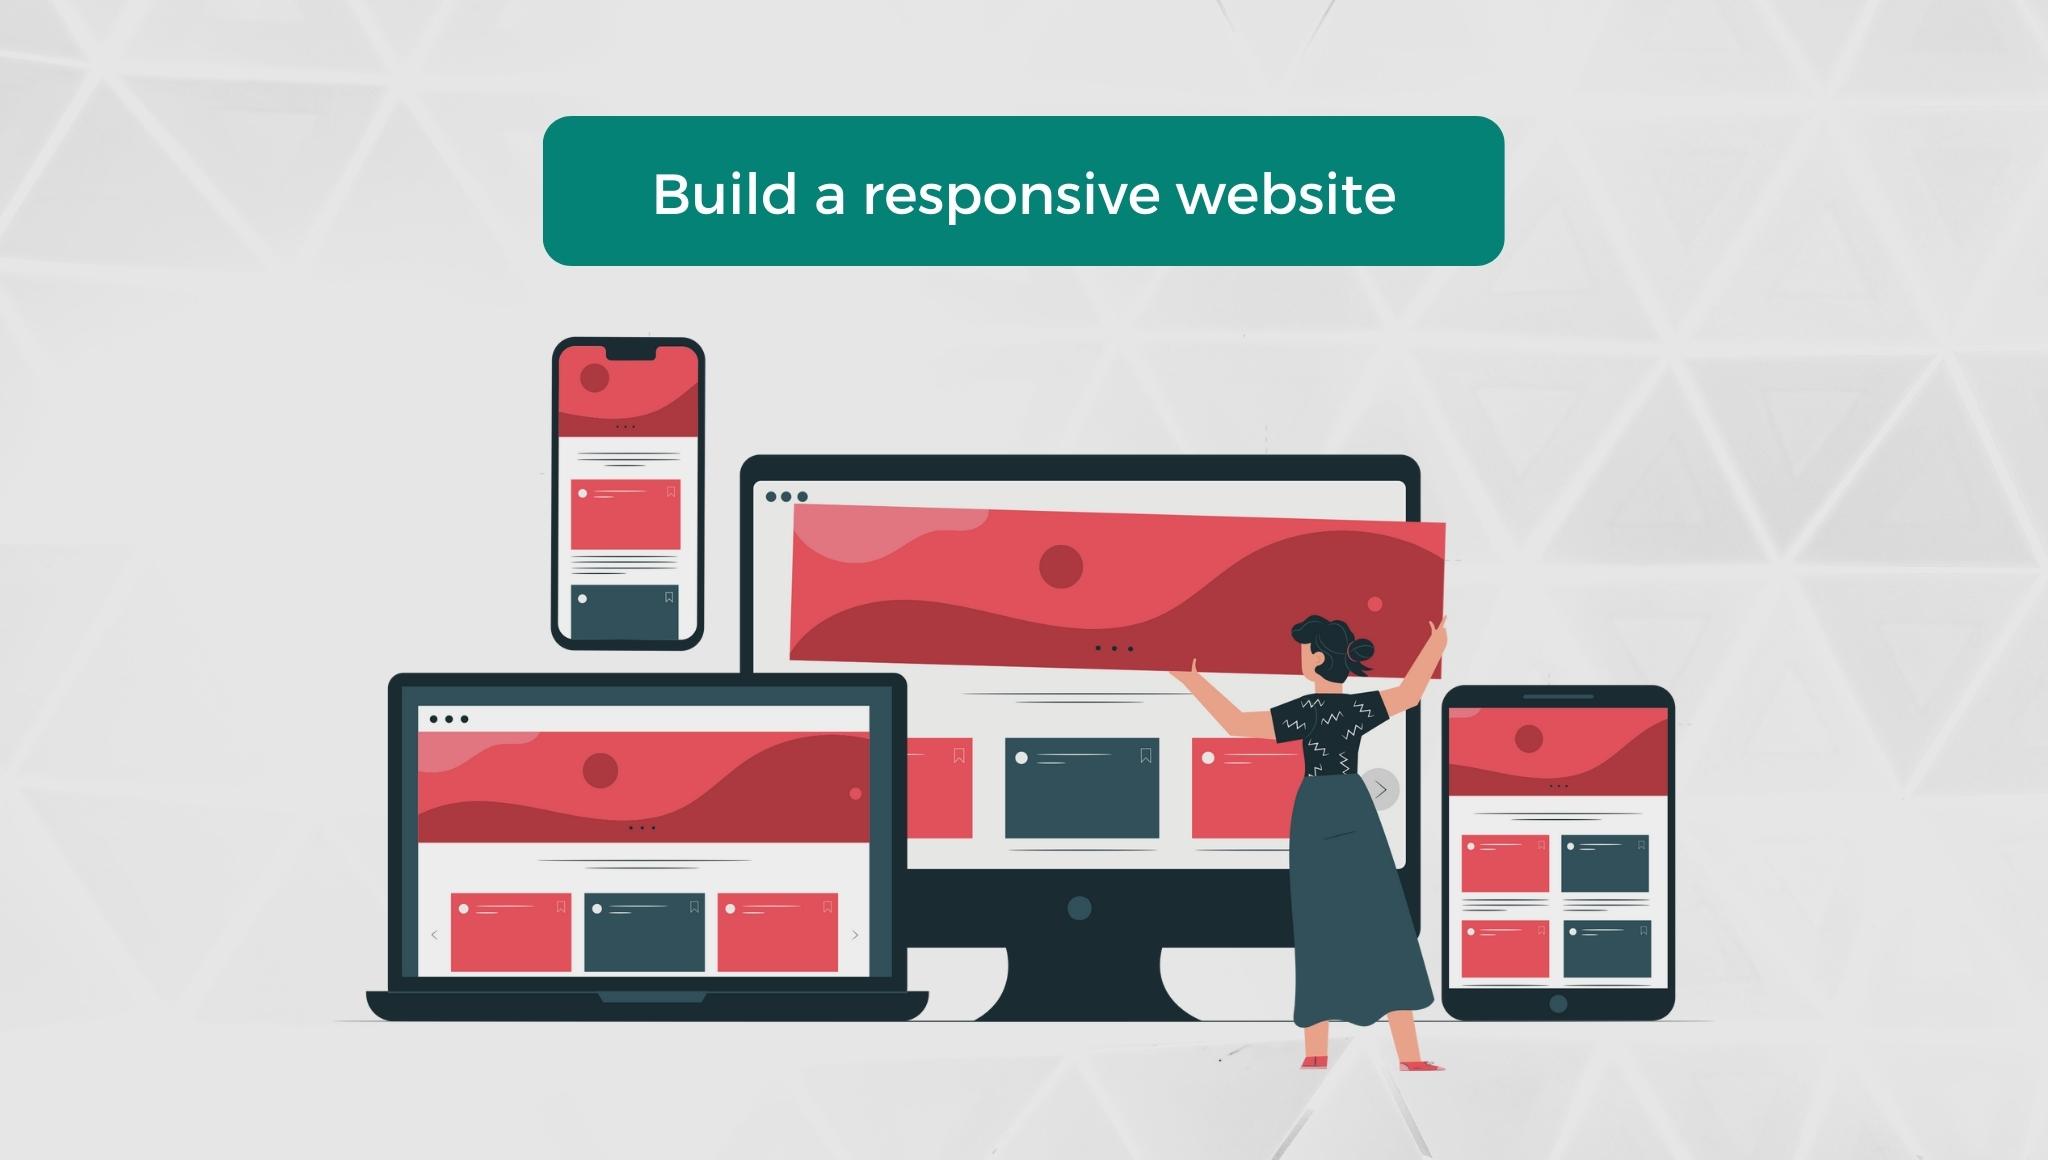 Build a responsive website